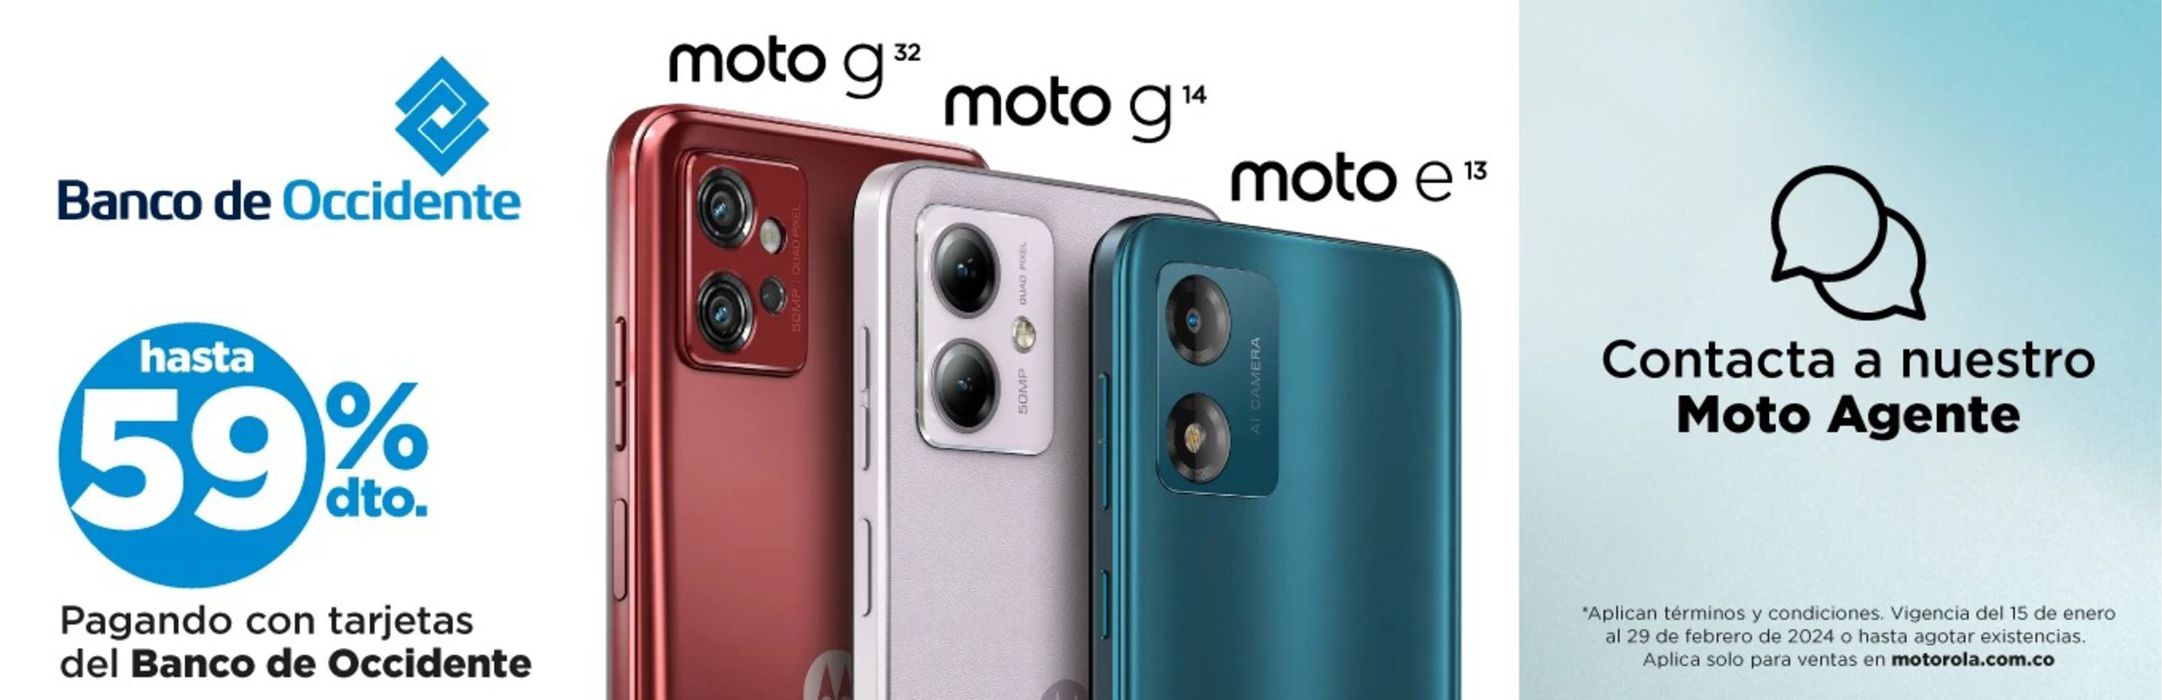 Catálogo Motorola | Hasta 59% dto | 22/1/2024 - 29/2/2024